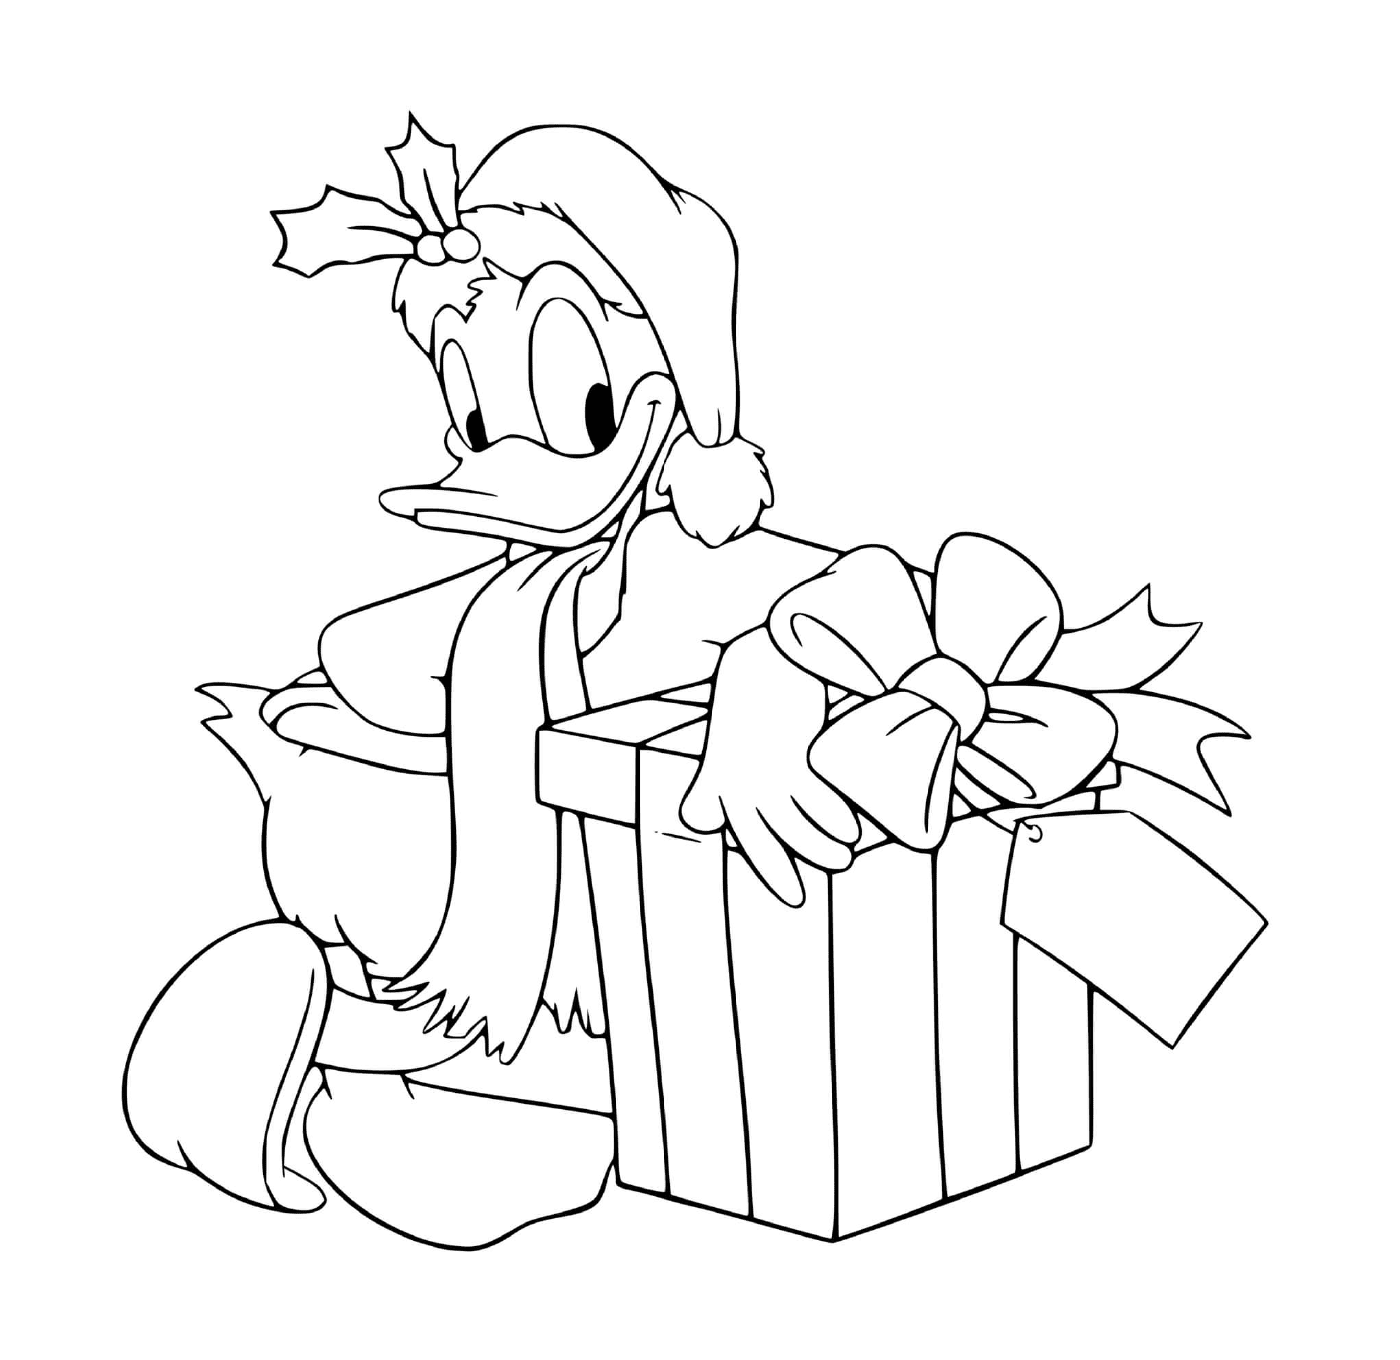  Donald next to a present 